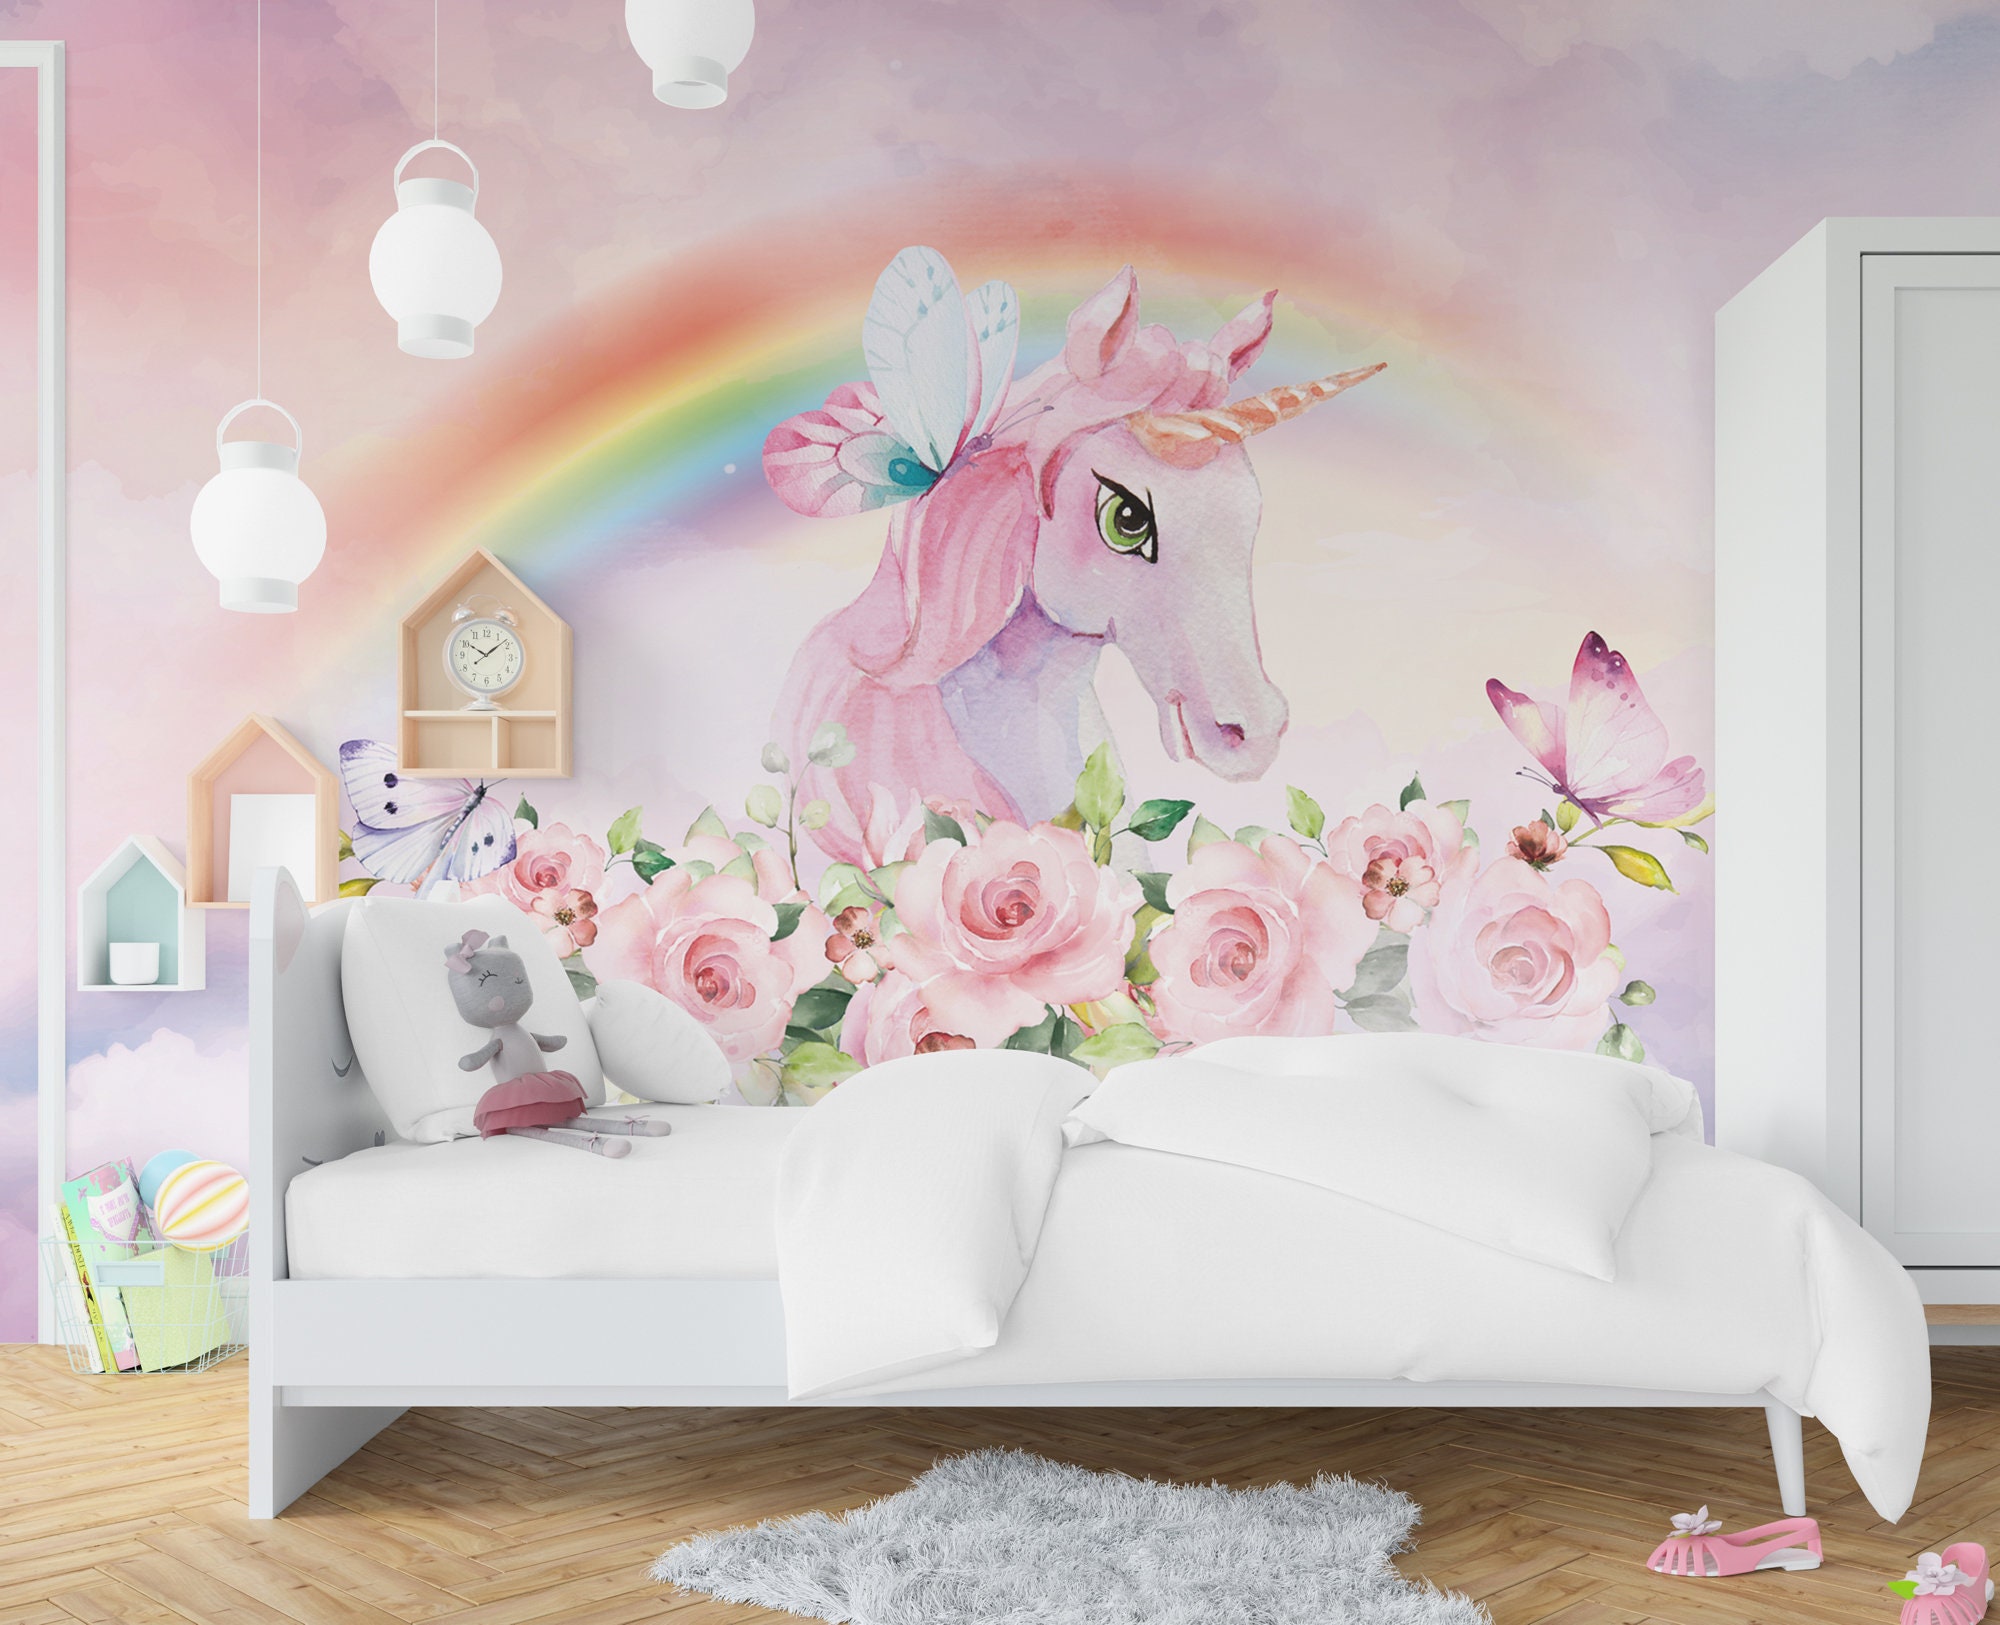 Unicorn and Rainbow Wallpaper for Girls Room Decor Nursery - Etsy 日本